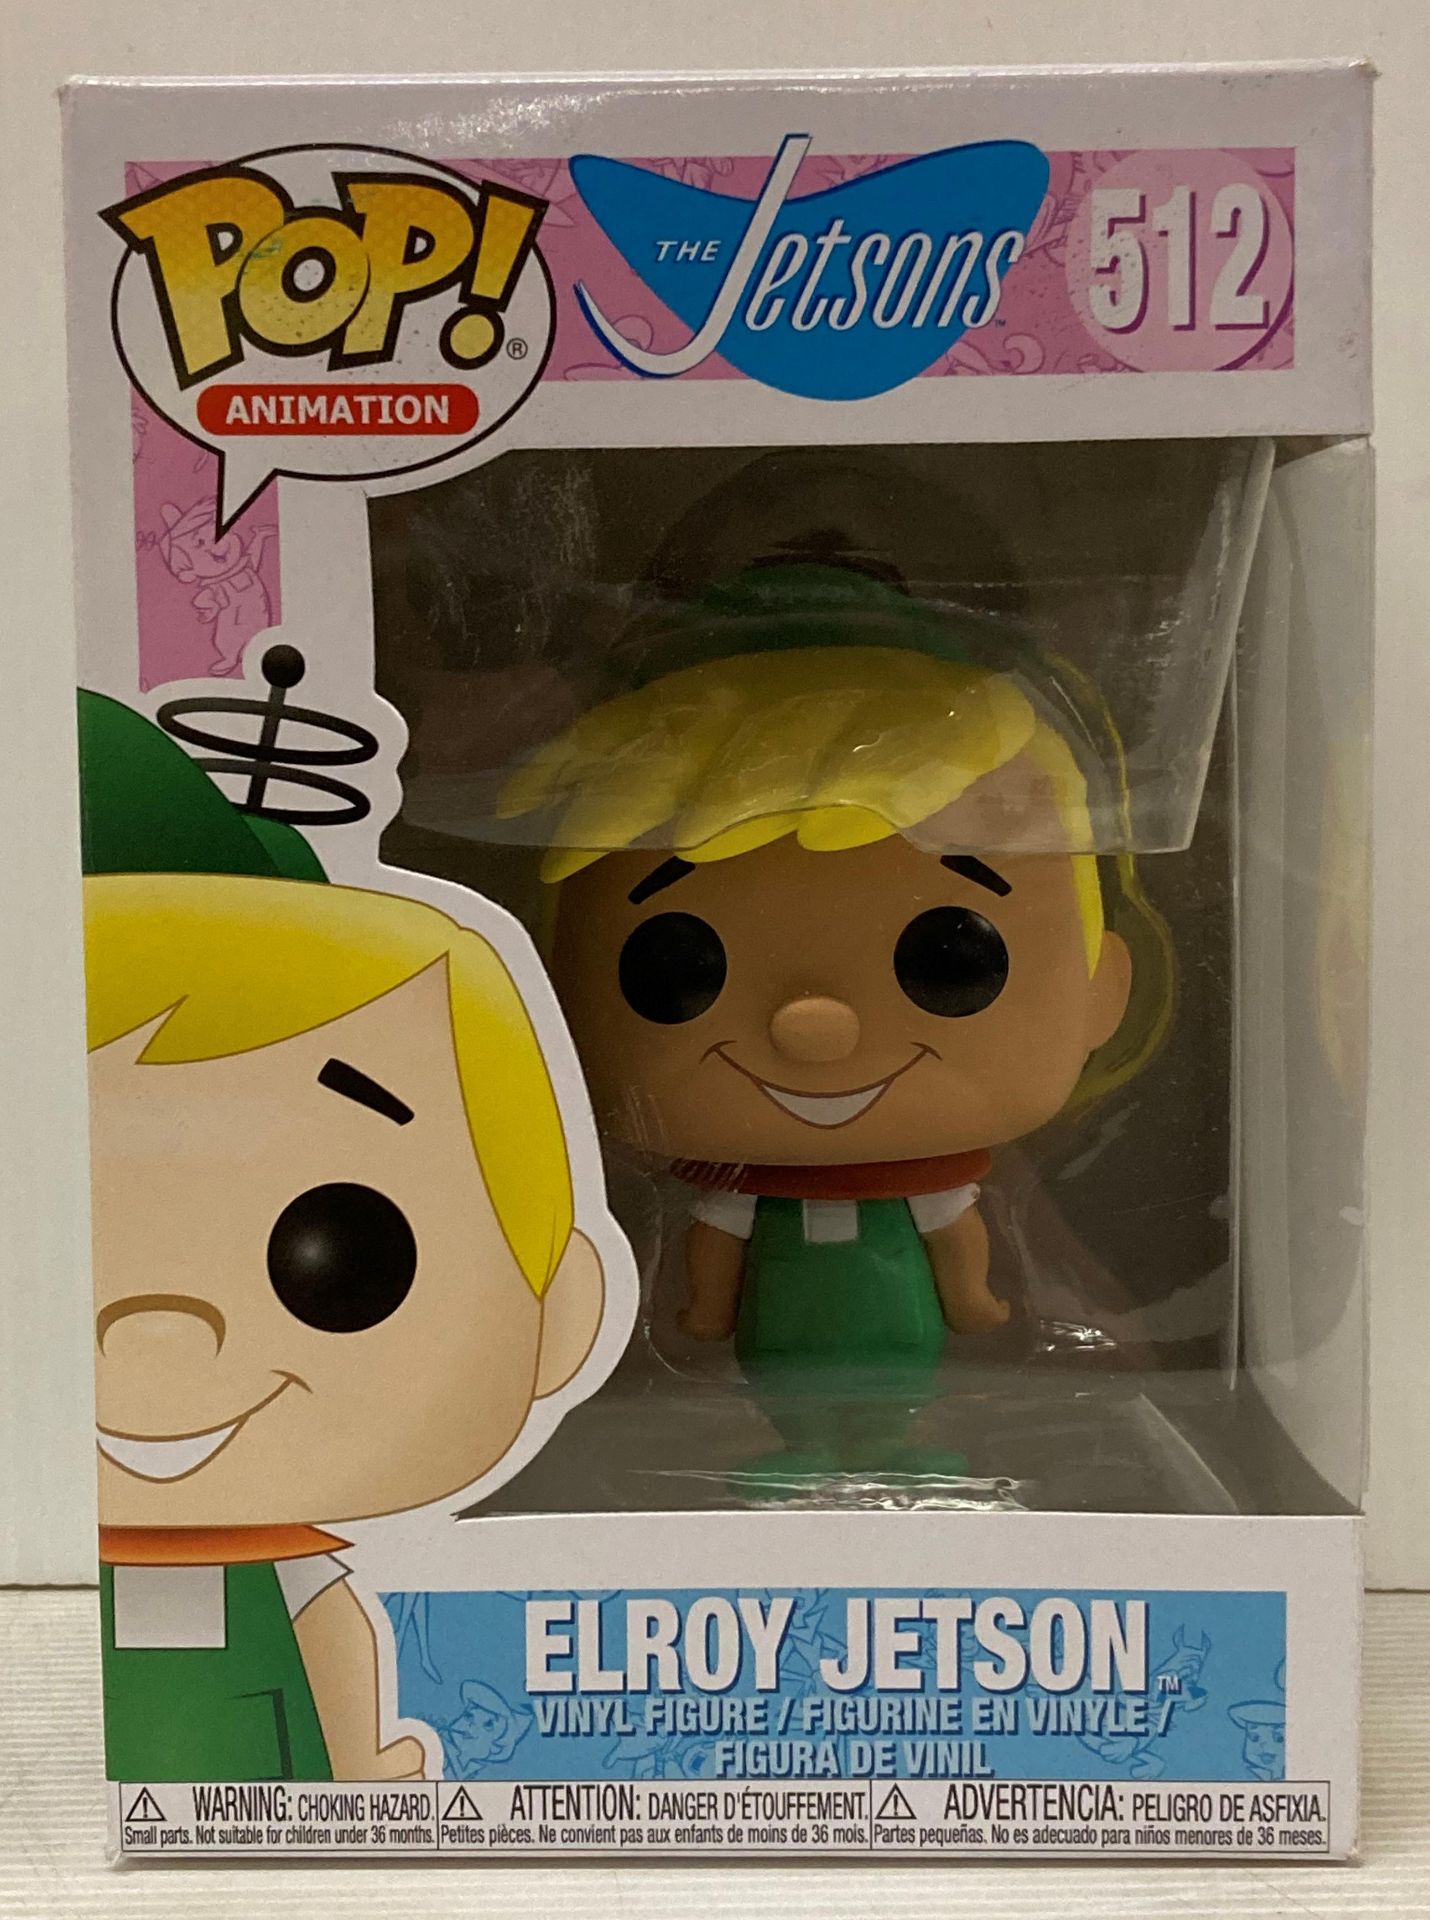 21 x Funko POP! The Jetsons: Elroy Jetson vinyl figurine (saleroom location: L05) Further